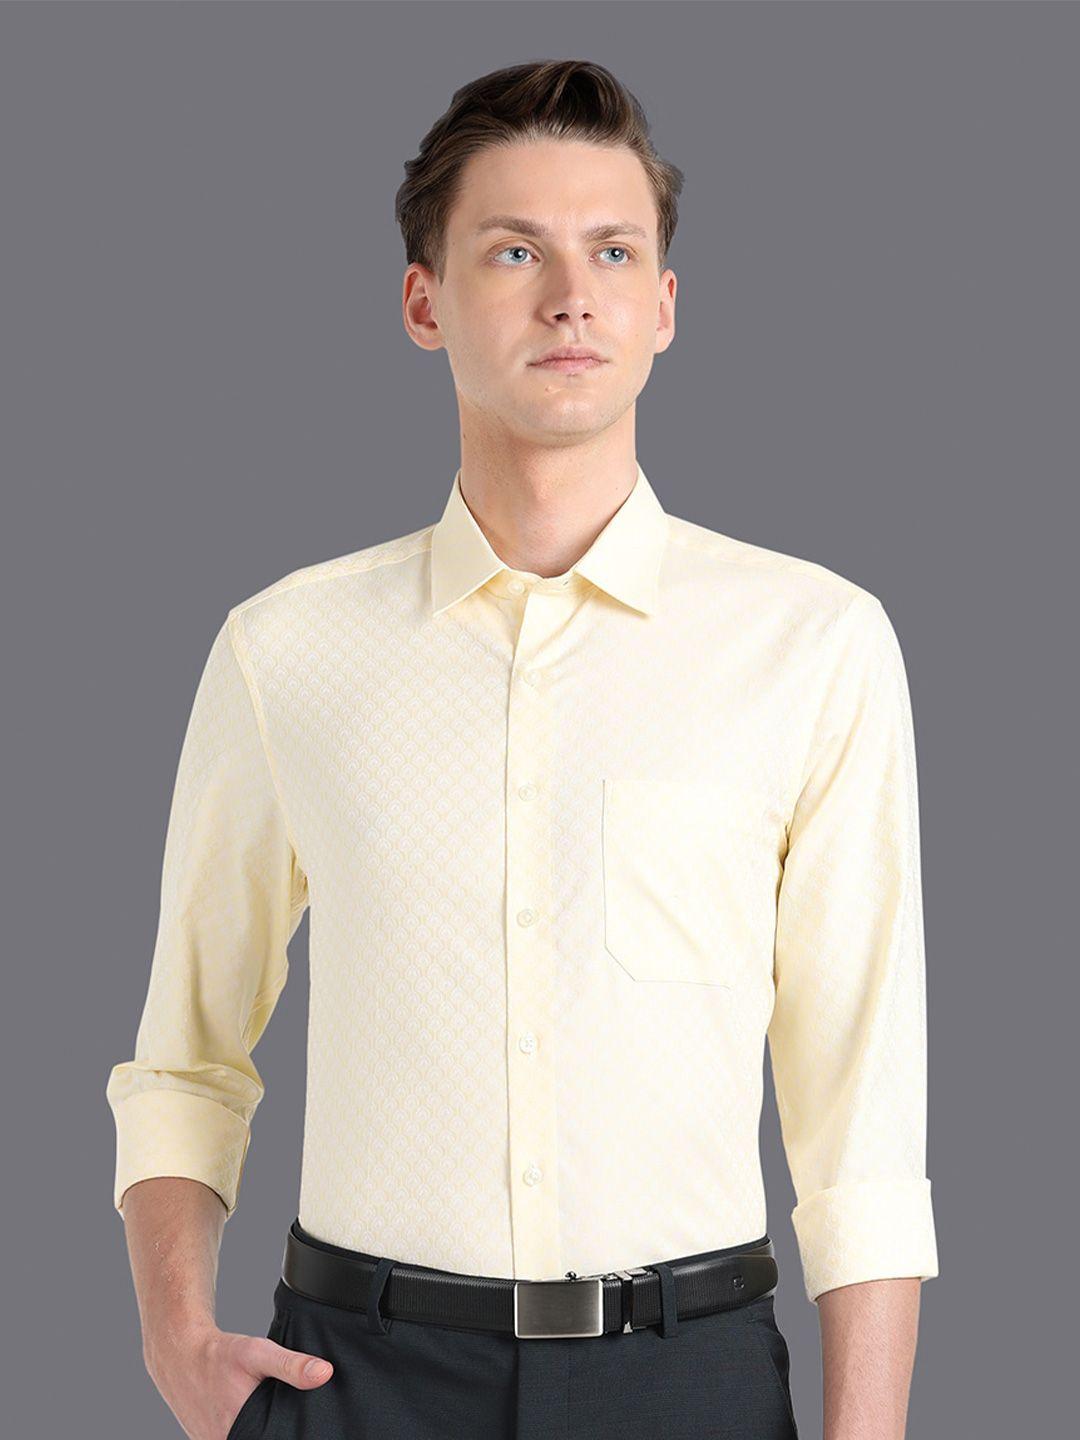 louis philippe men slim fit floral printed pure cotton formal shirt